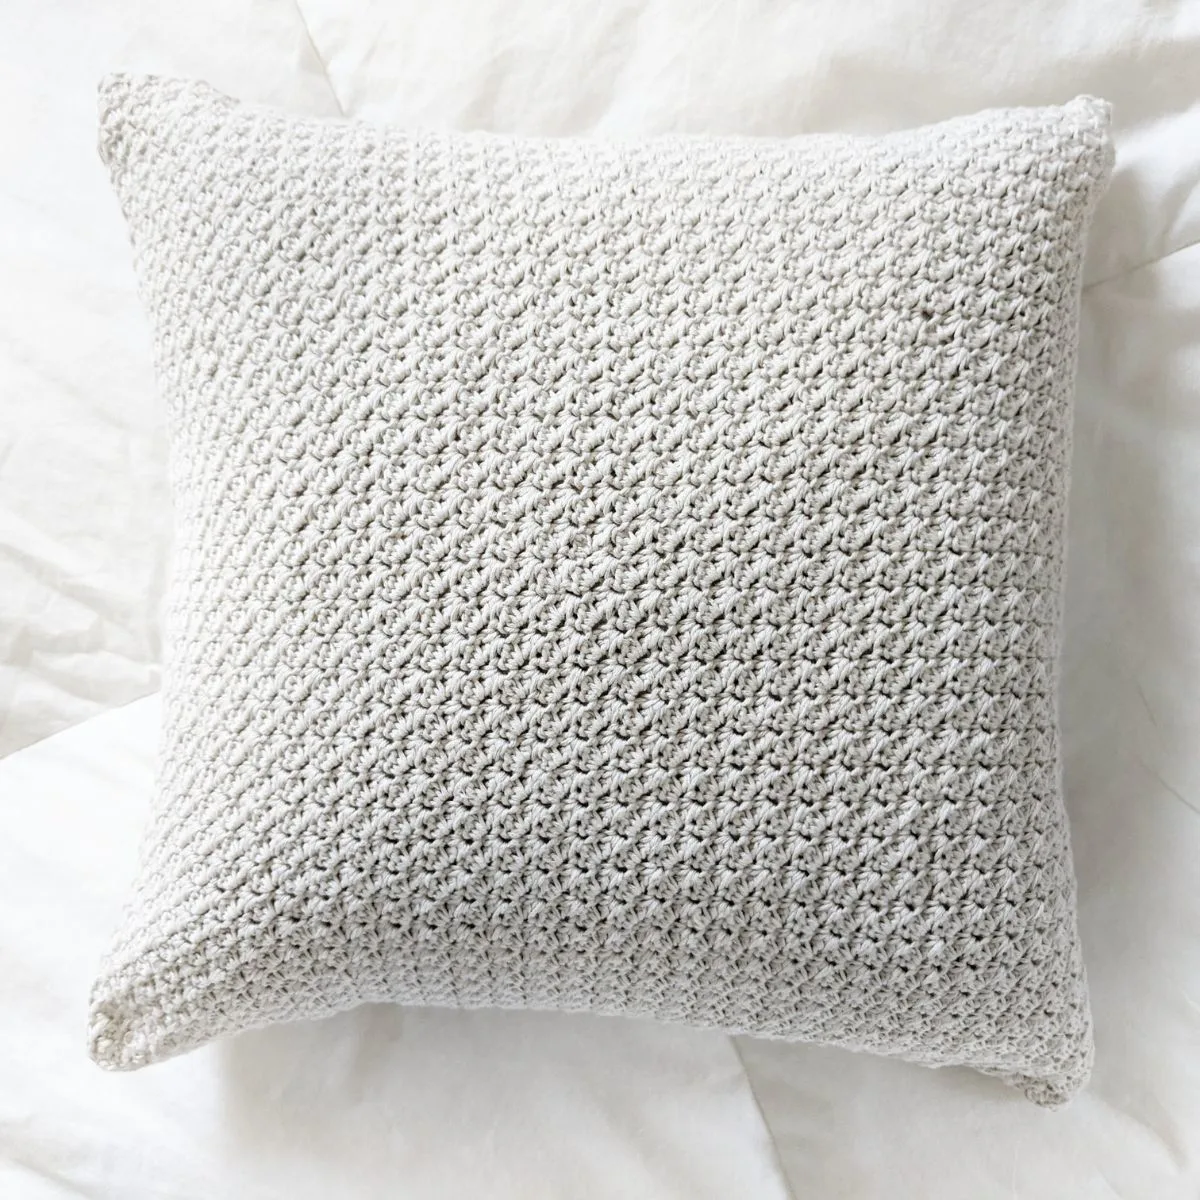 A farmhouse style crochet pillow on a bed.